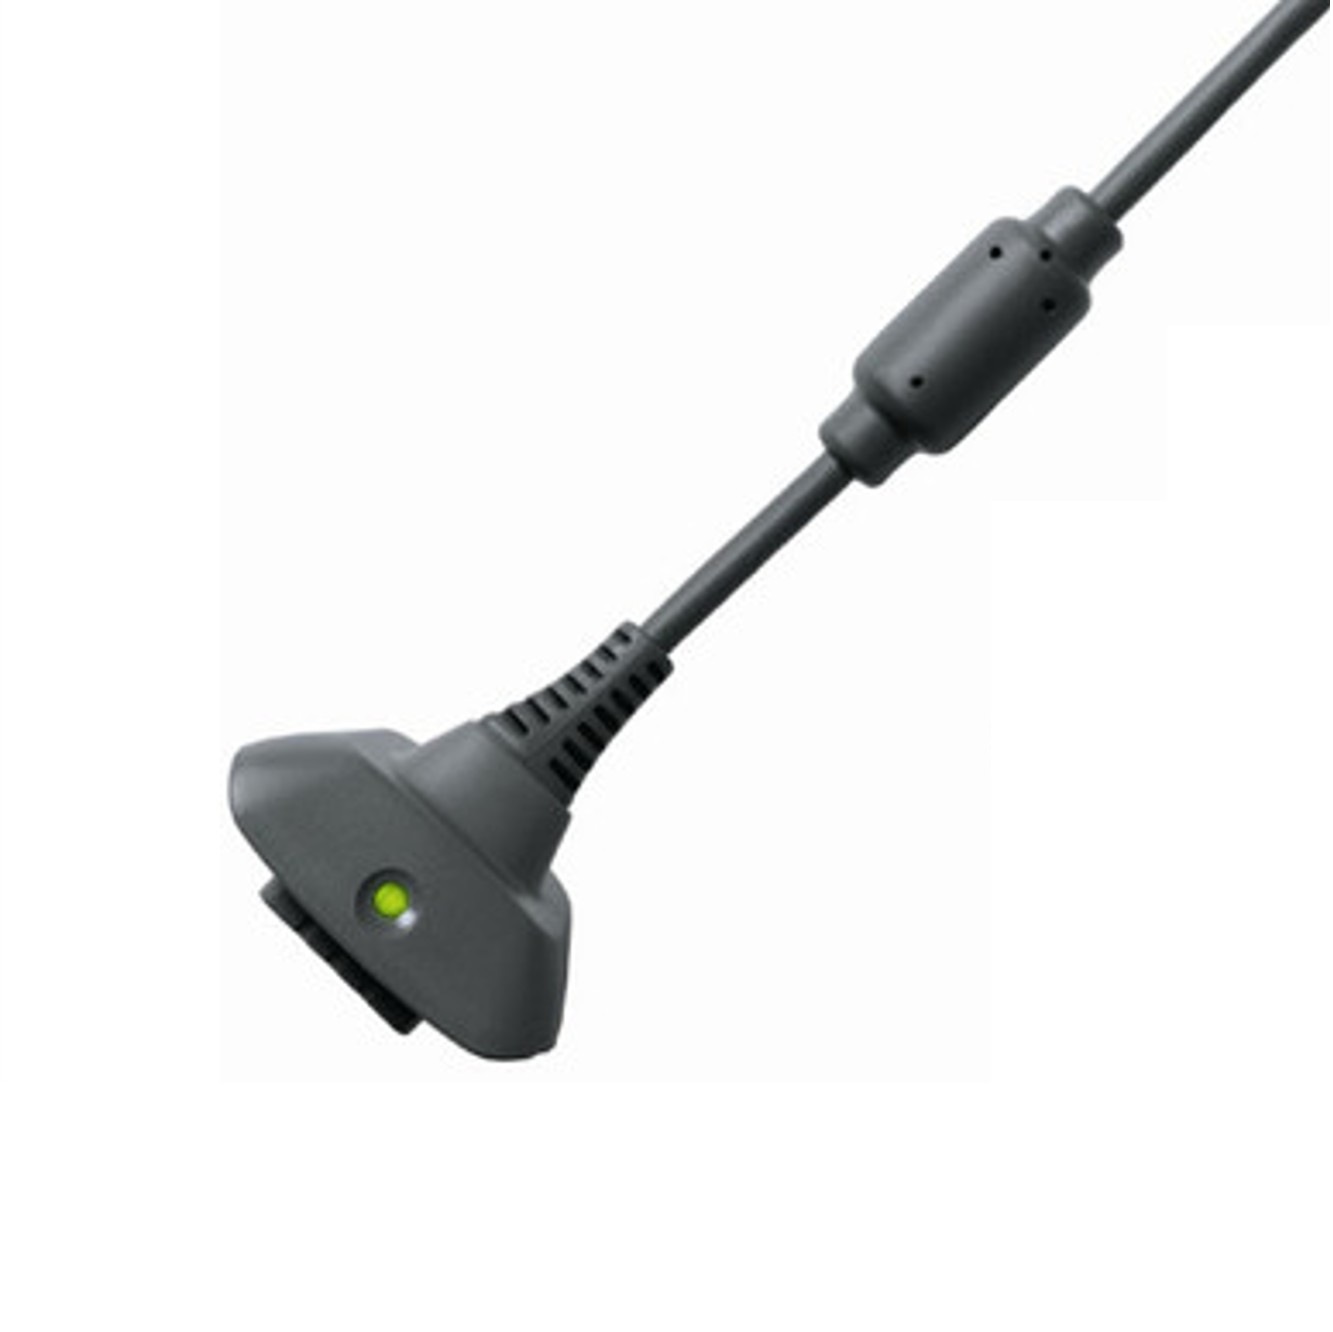 Originele Microsoft Xbox 360 Play & Charge Kabel - Grijs Kopen | Xbox 360 Hardware